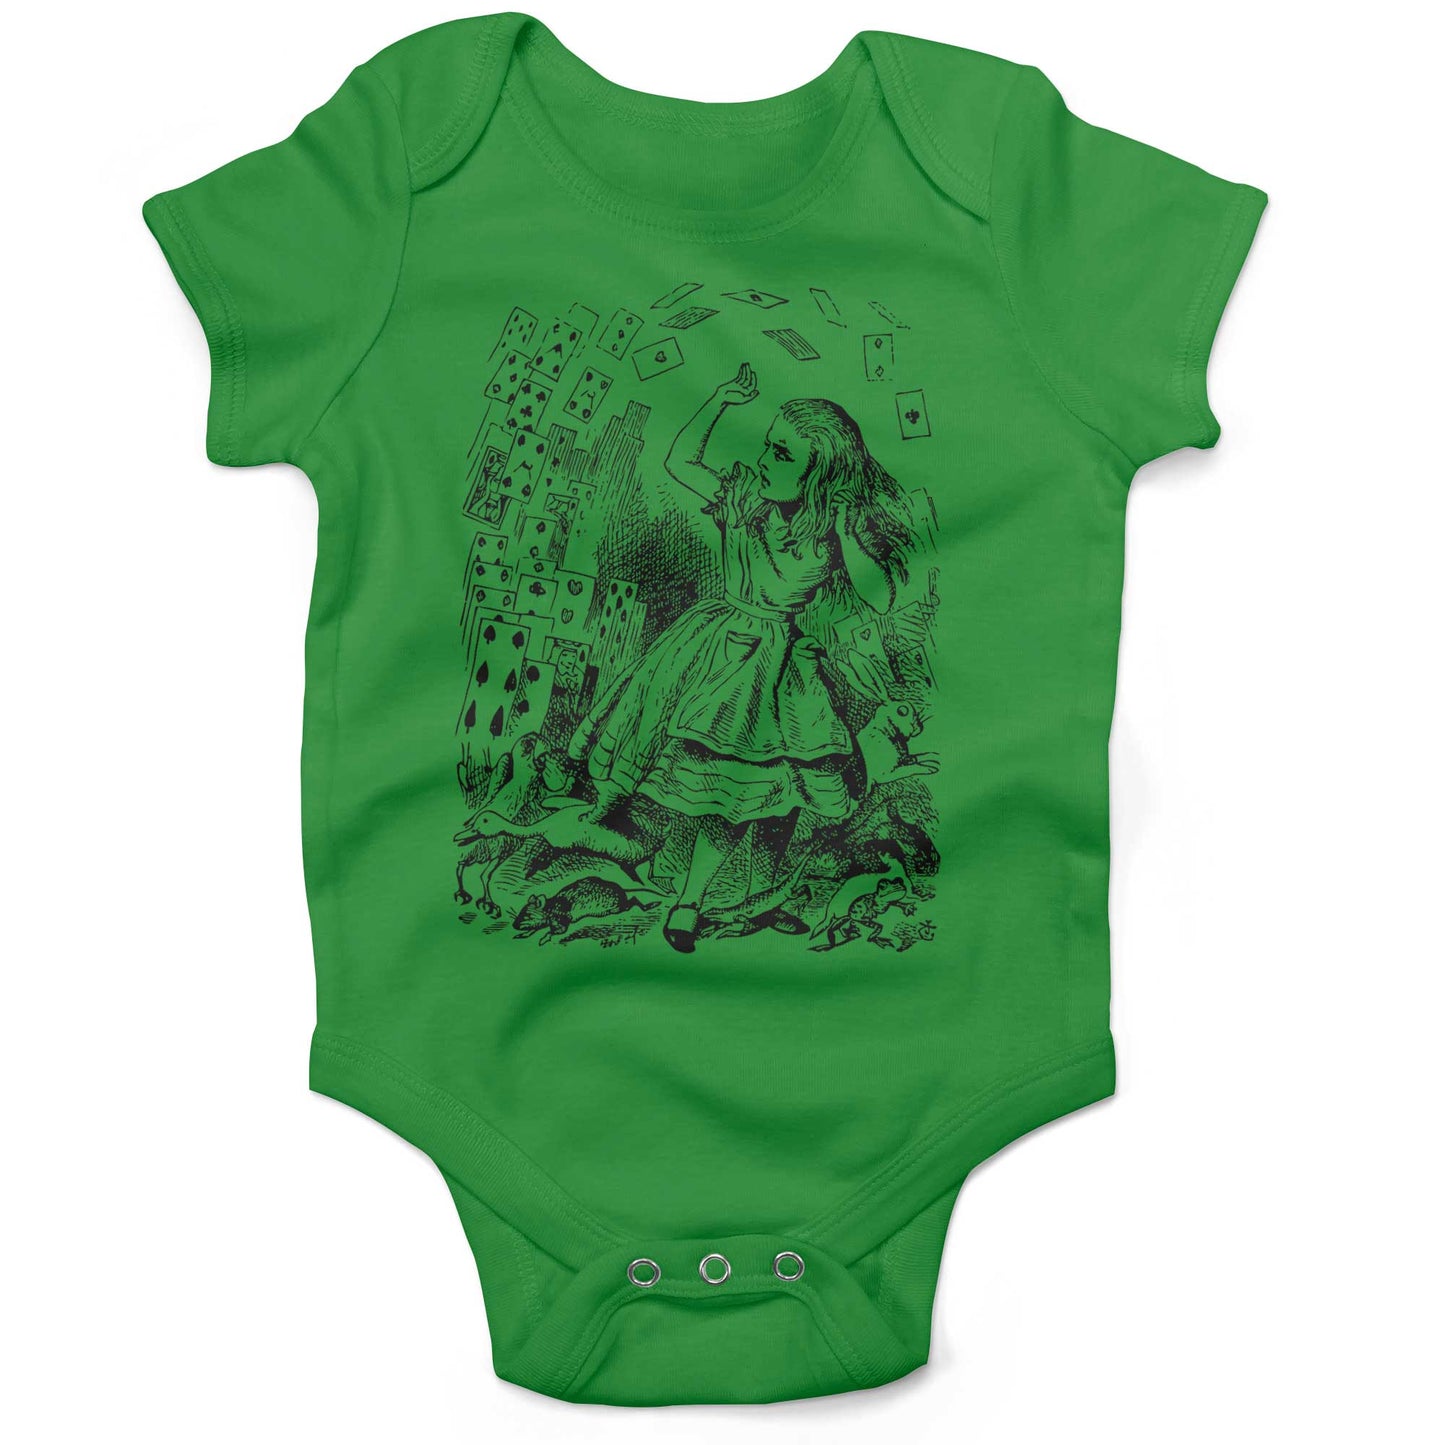 Alice In Wonderland Playing Cards Infant Bodysuit or Raglan Baby Tee-Grass Green-3-6 months